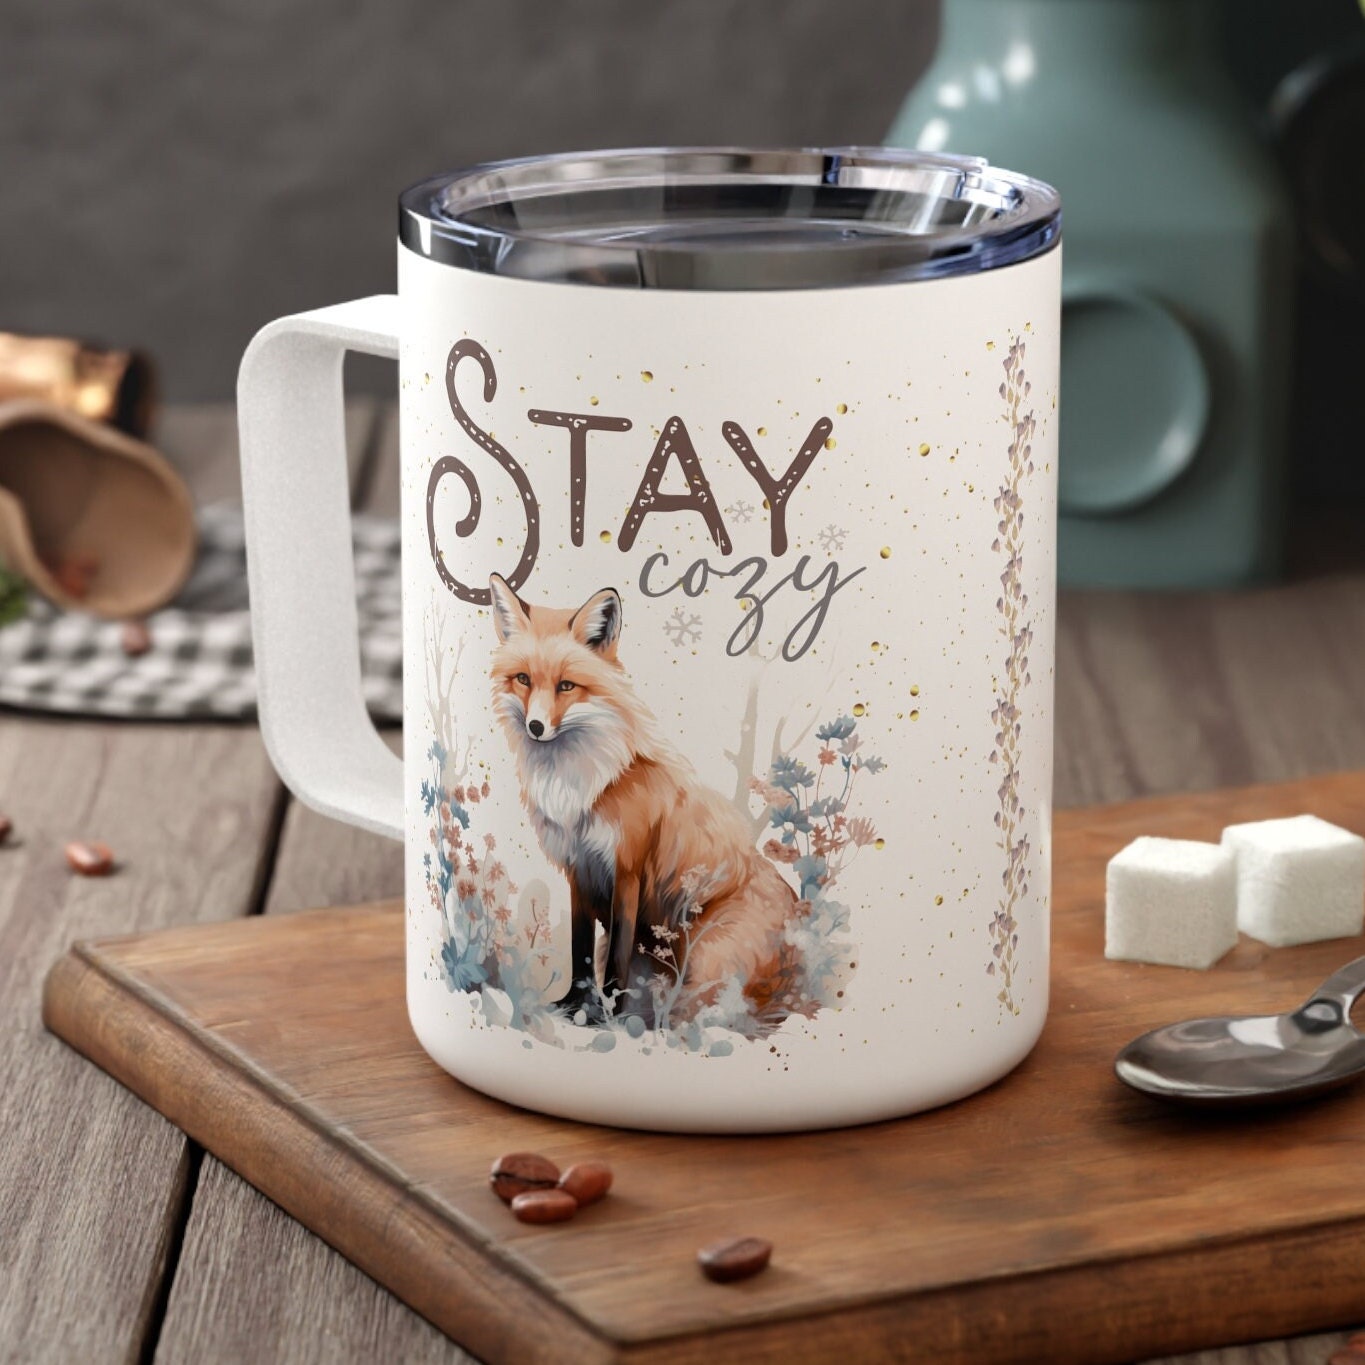 Fox Ceramic Mug - Fox Tail Handle - Coffee Cup - ApolloBox